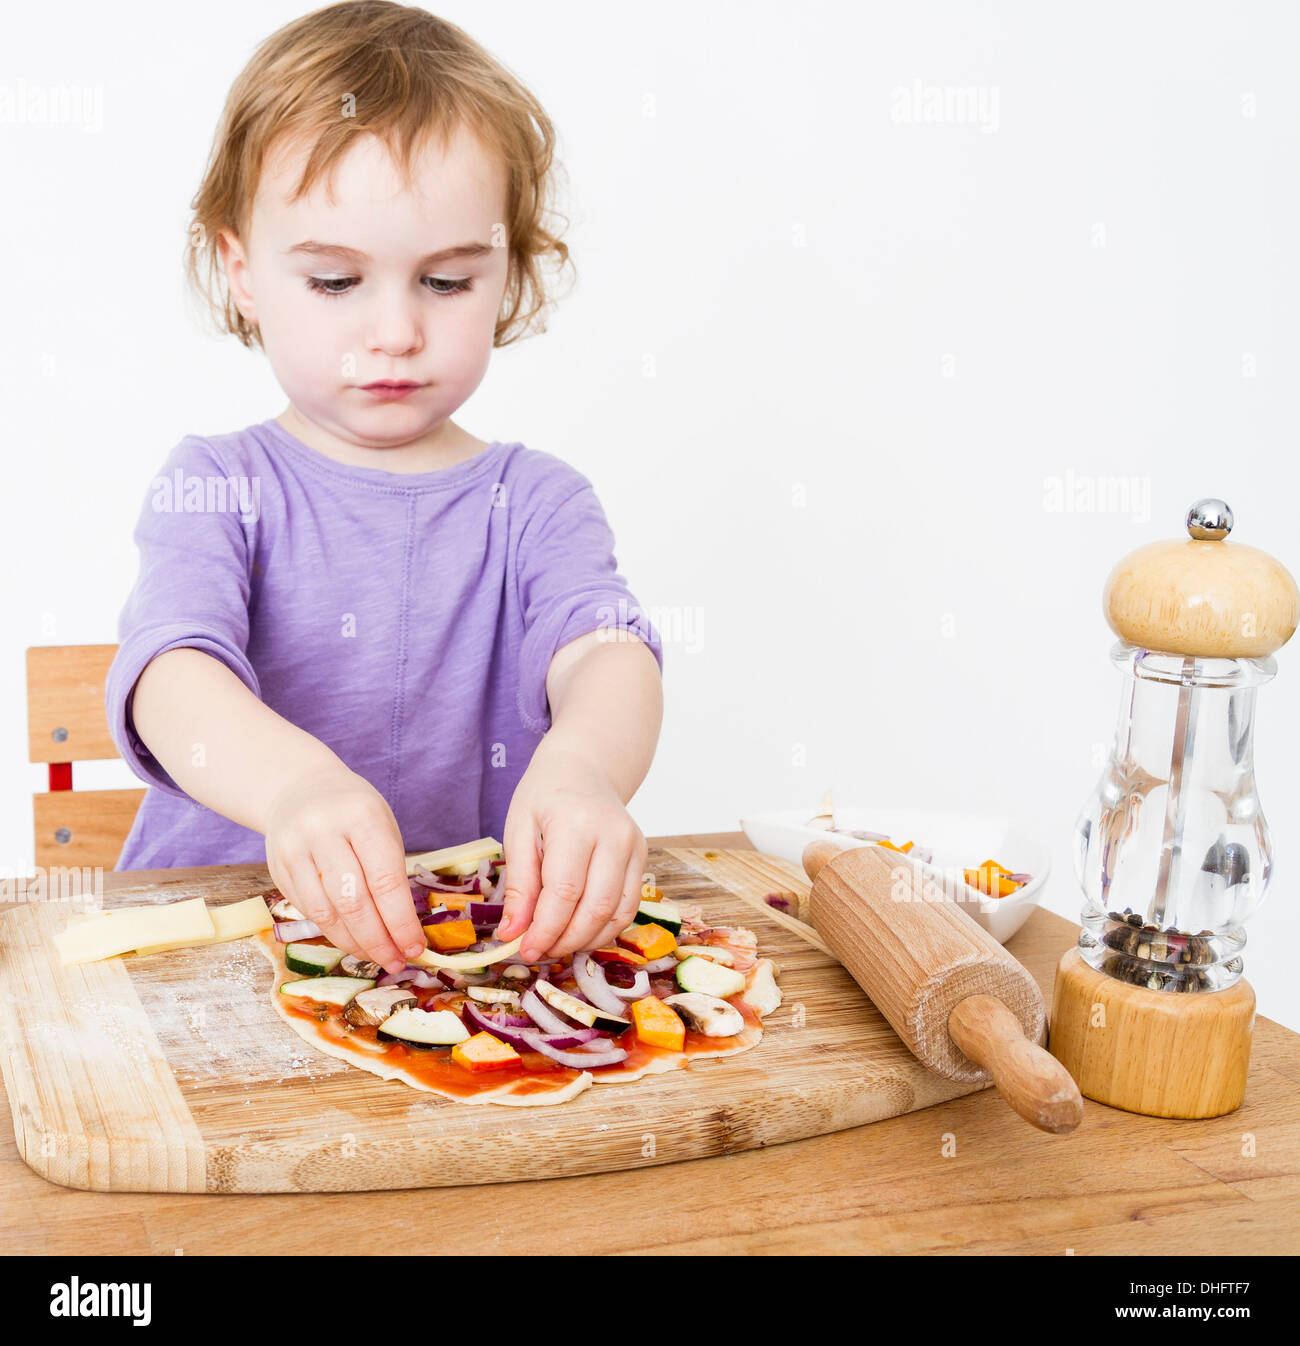 Cute Little Girl preparando pizza fresca en fondo gris neutro Foto de stock